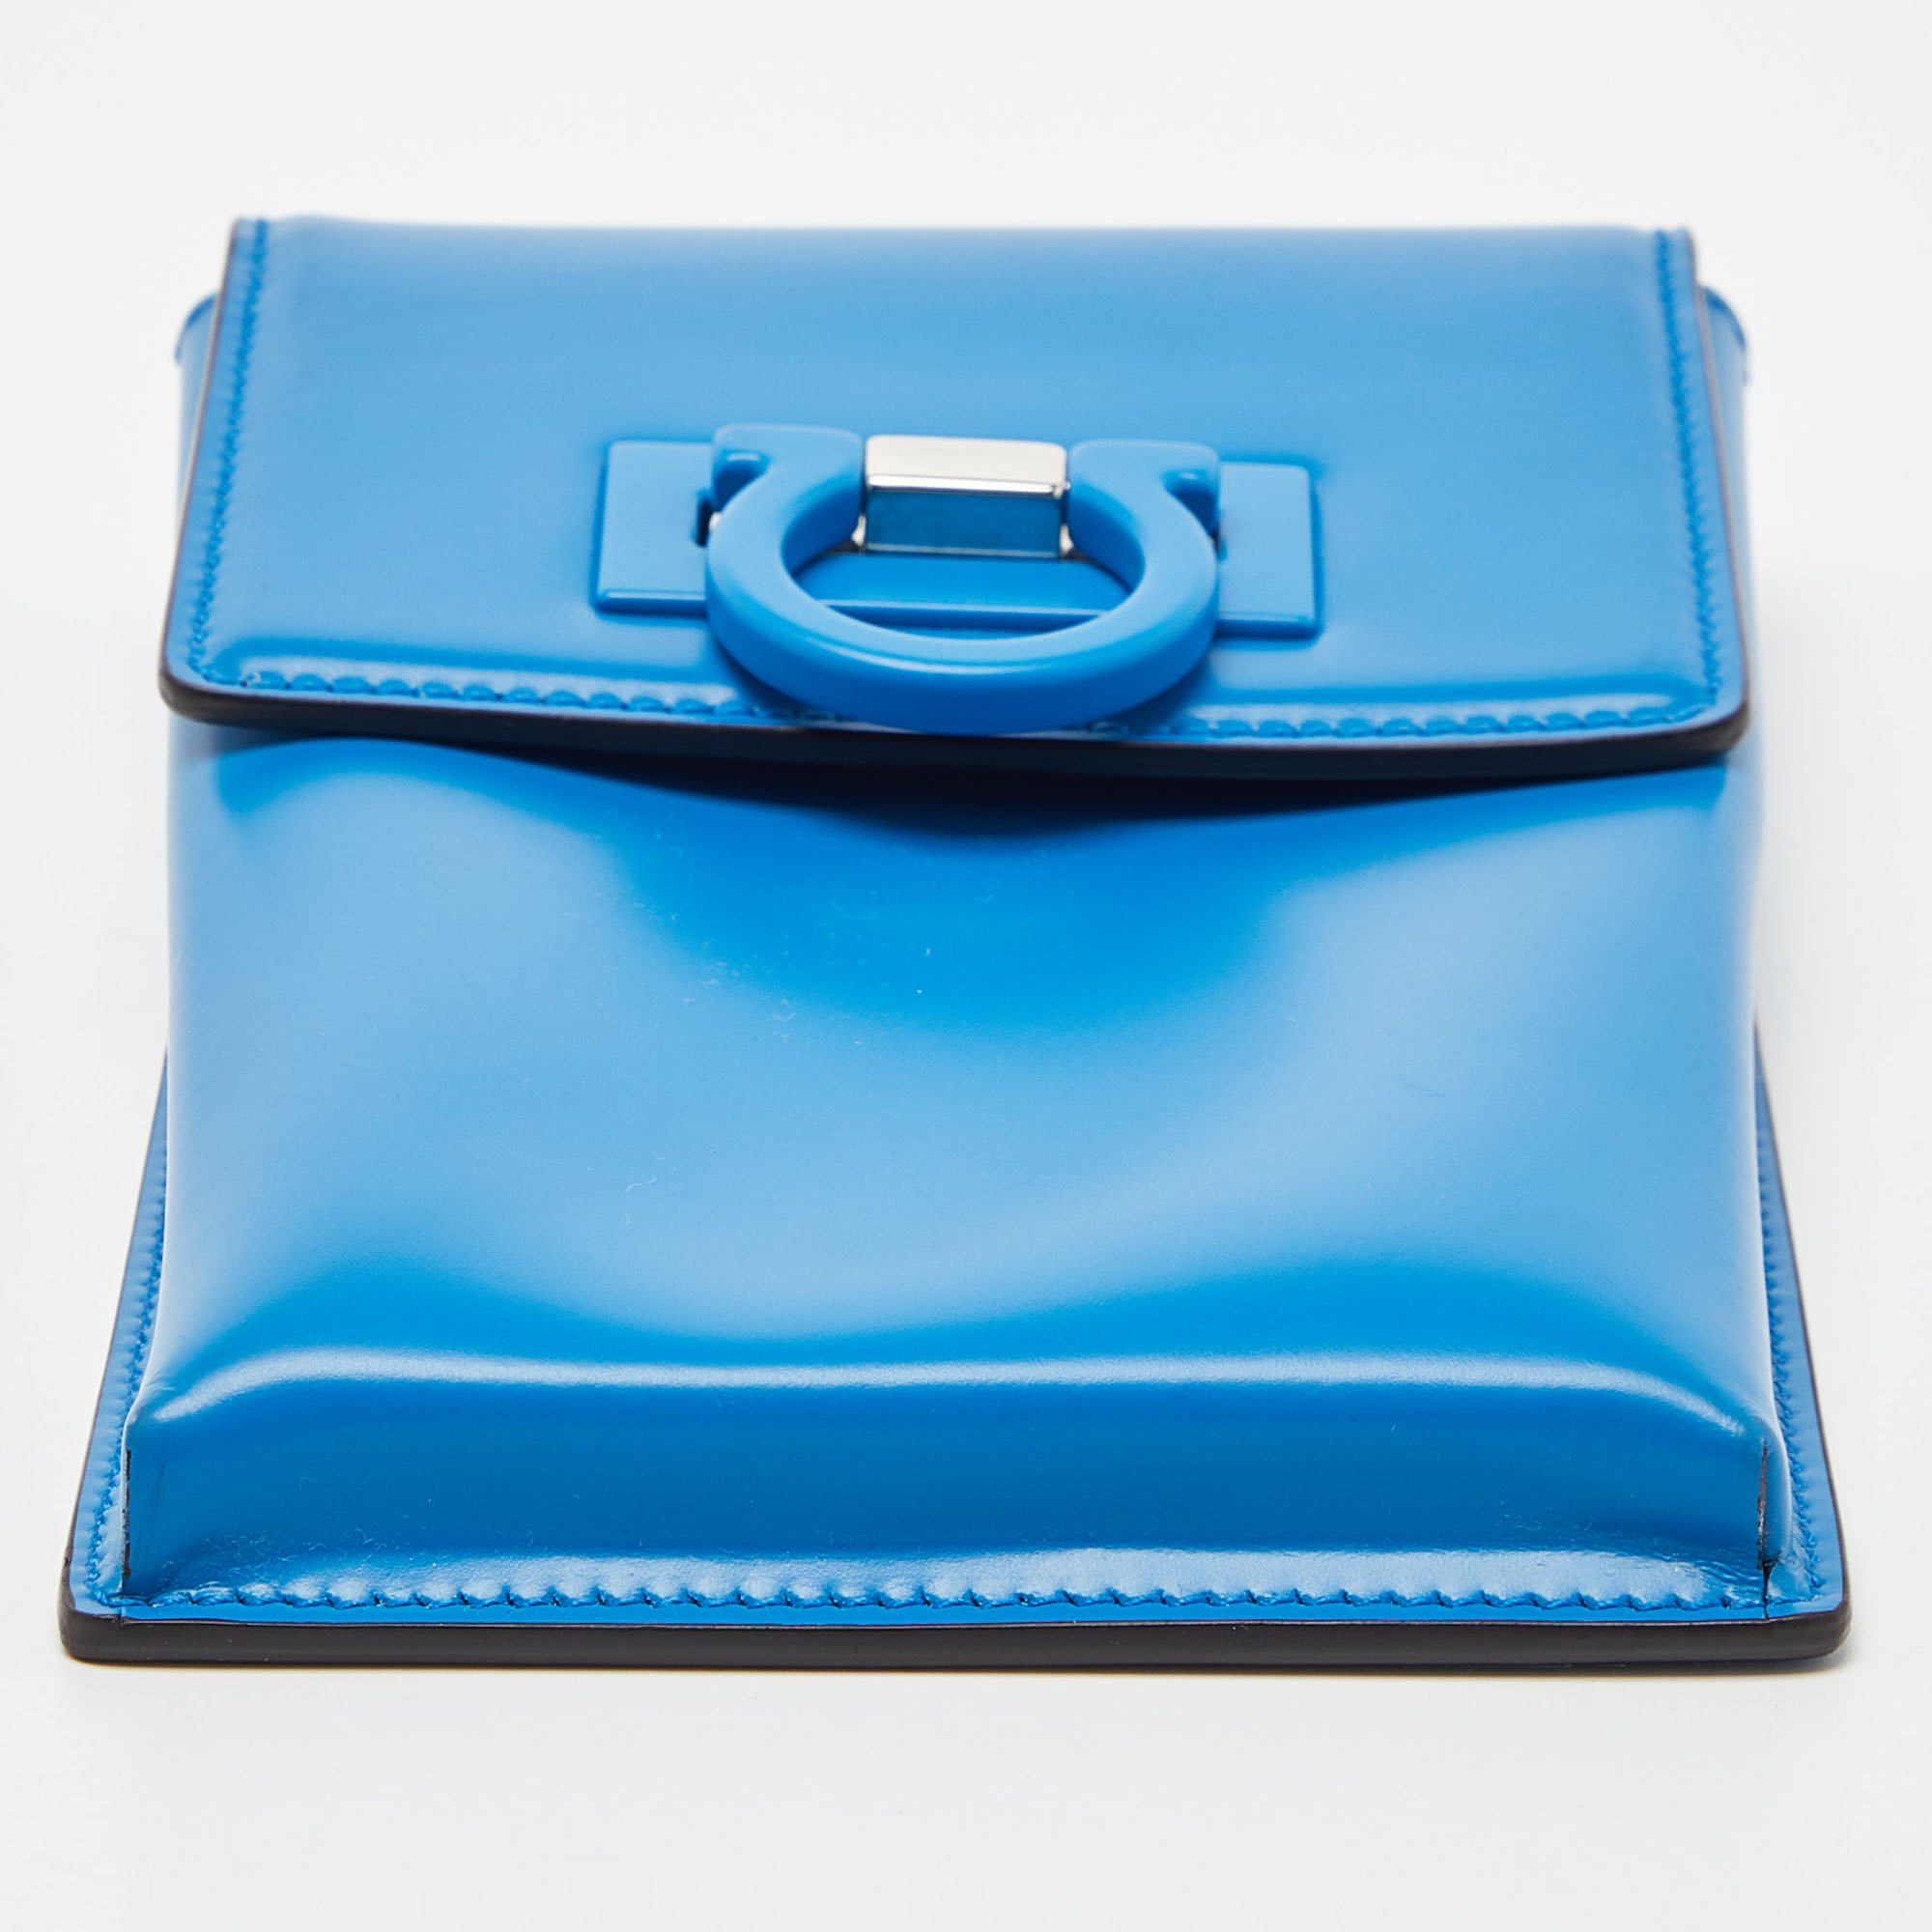 Salvatore Ferragamo Blue Leather Trifolio Phone Holder Crossbody Bag